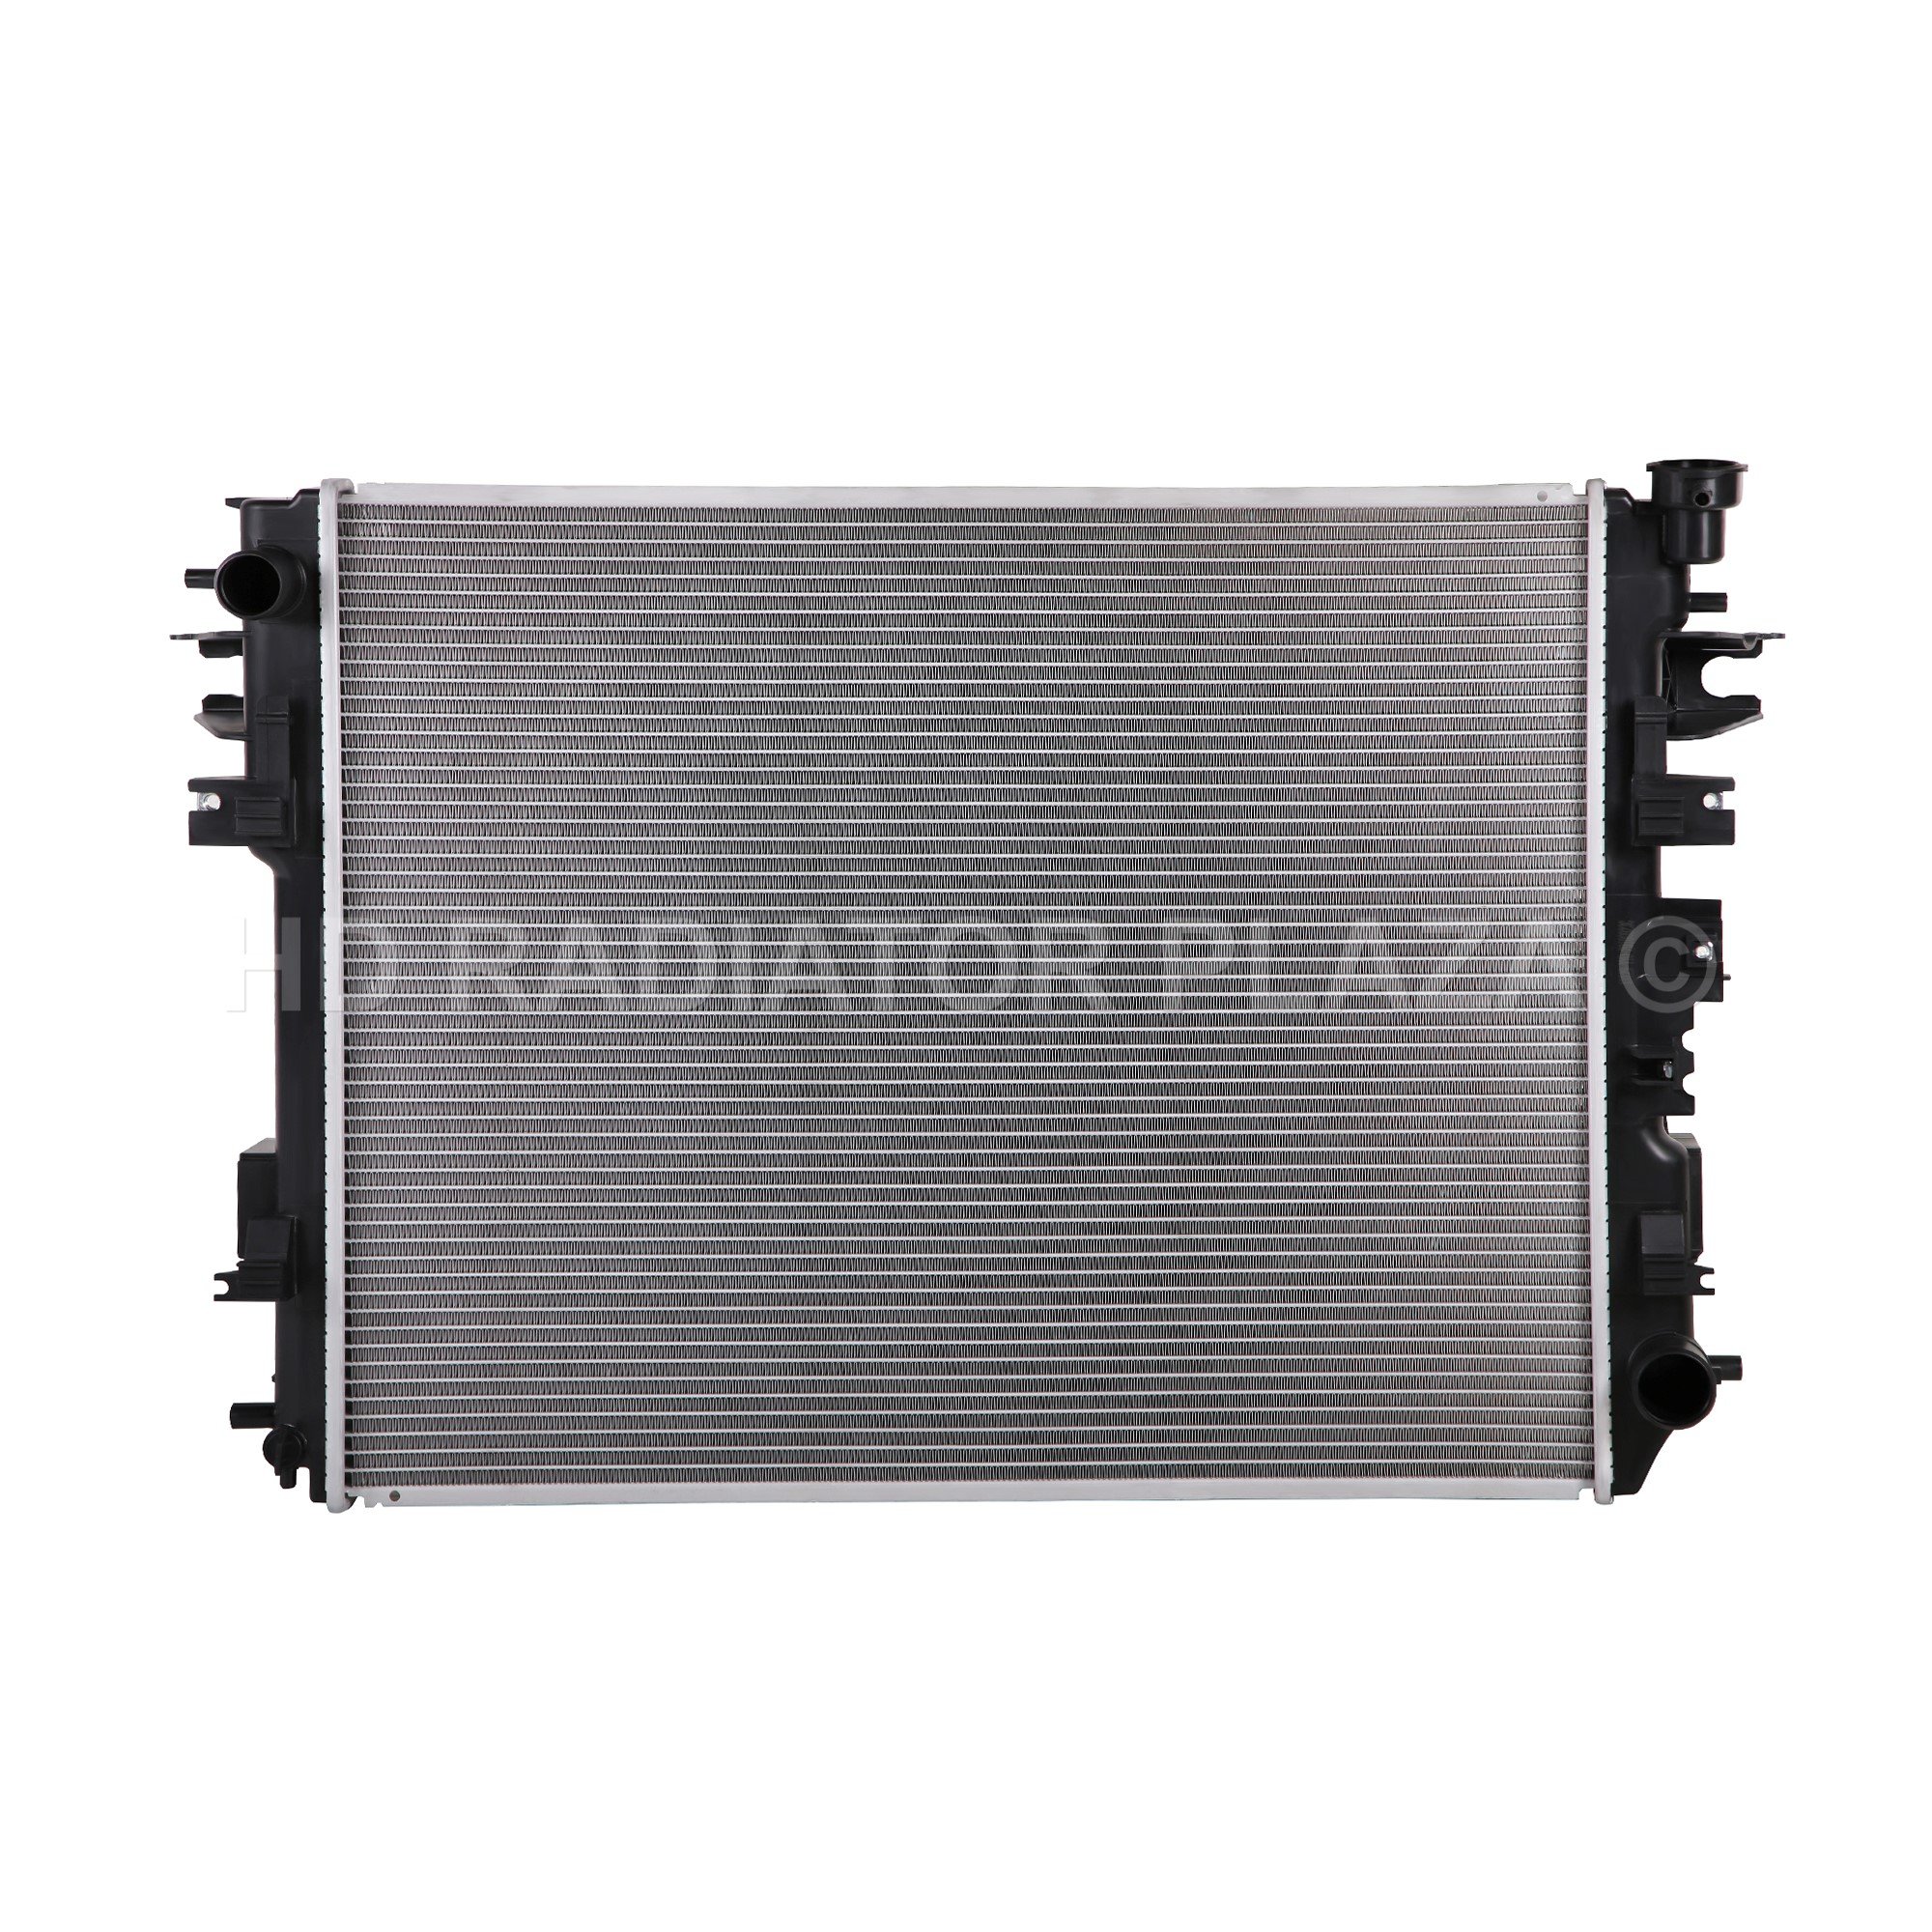 Radiator for 09-18 Dodge RAM